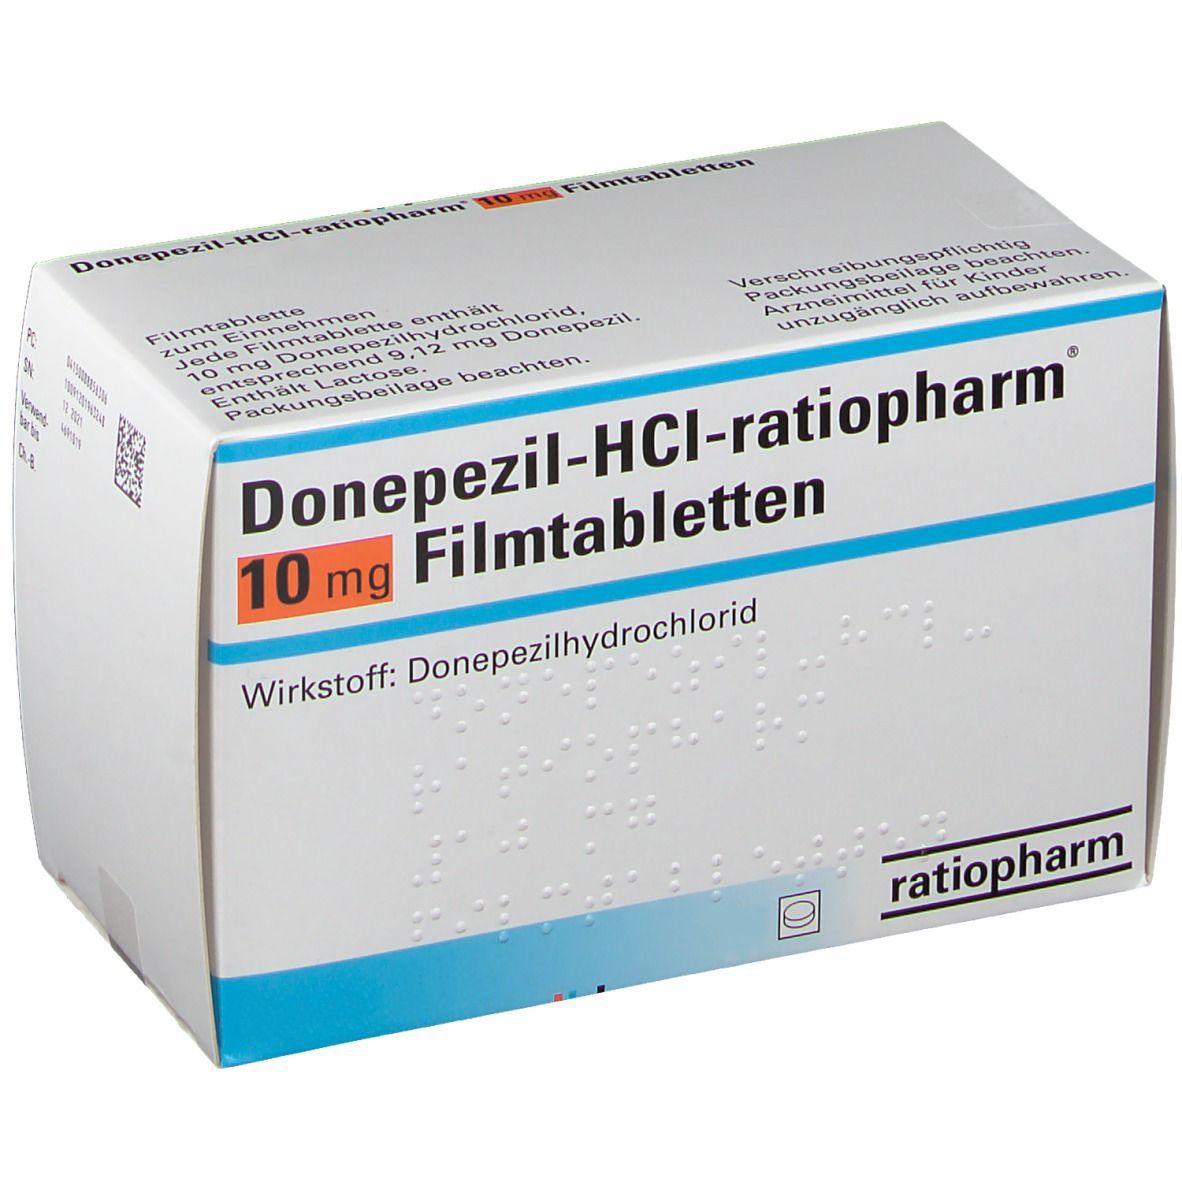 Donepezil-HCl-ratiopharm® 10 mg